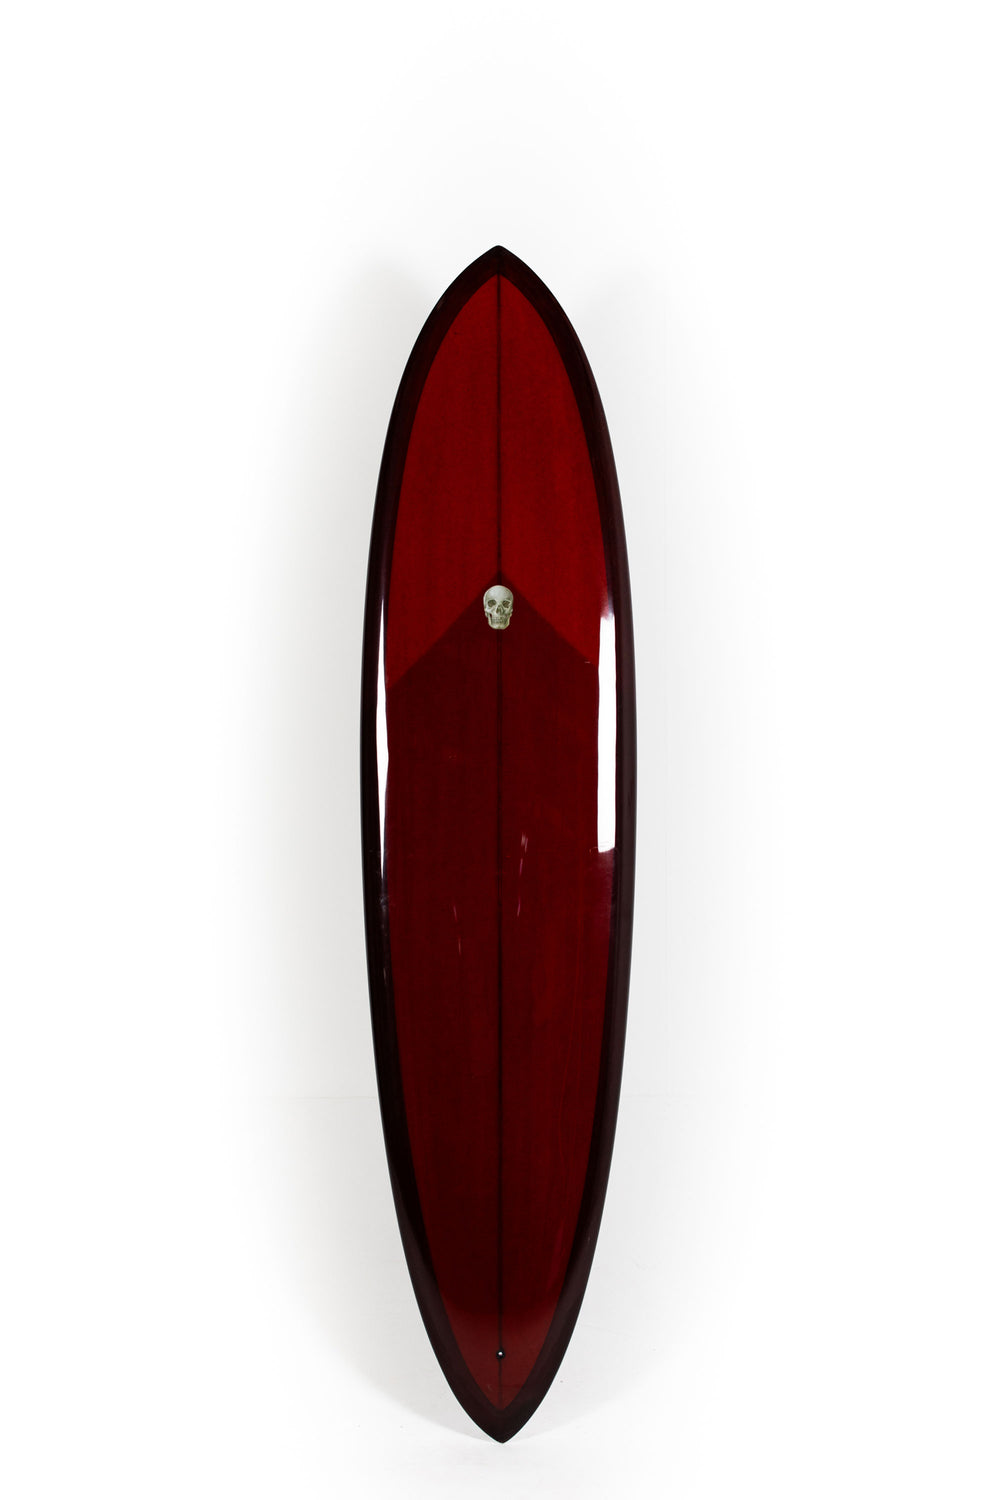 Pukas Surf Shop - Christenson Surfboards - C-BUCKET - 7'6